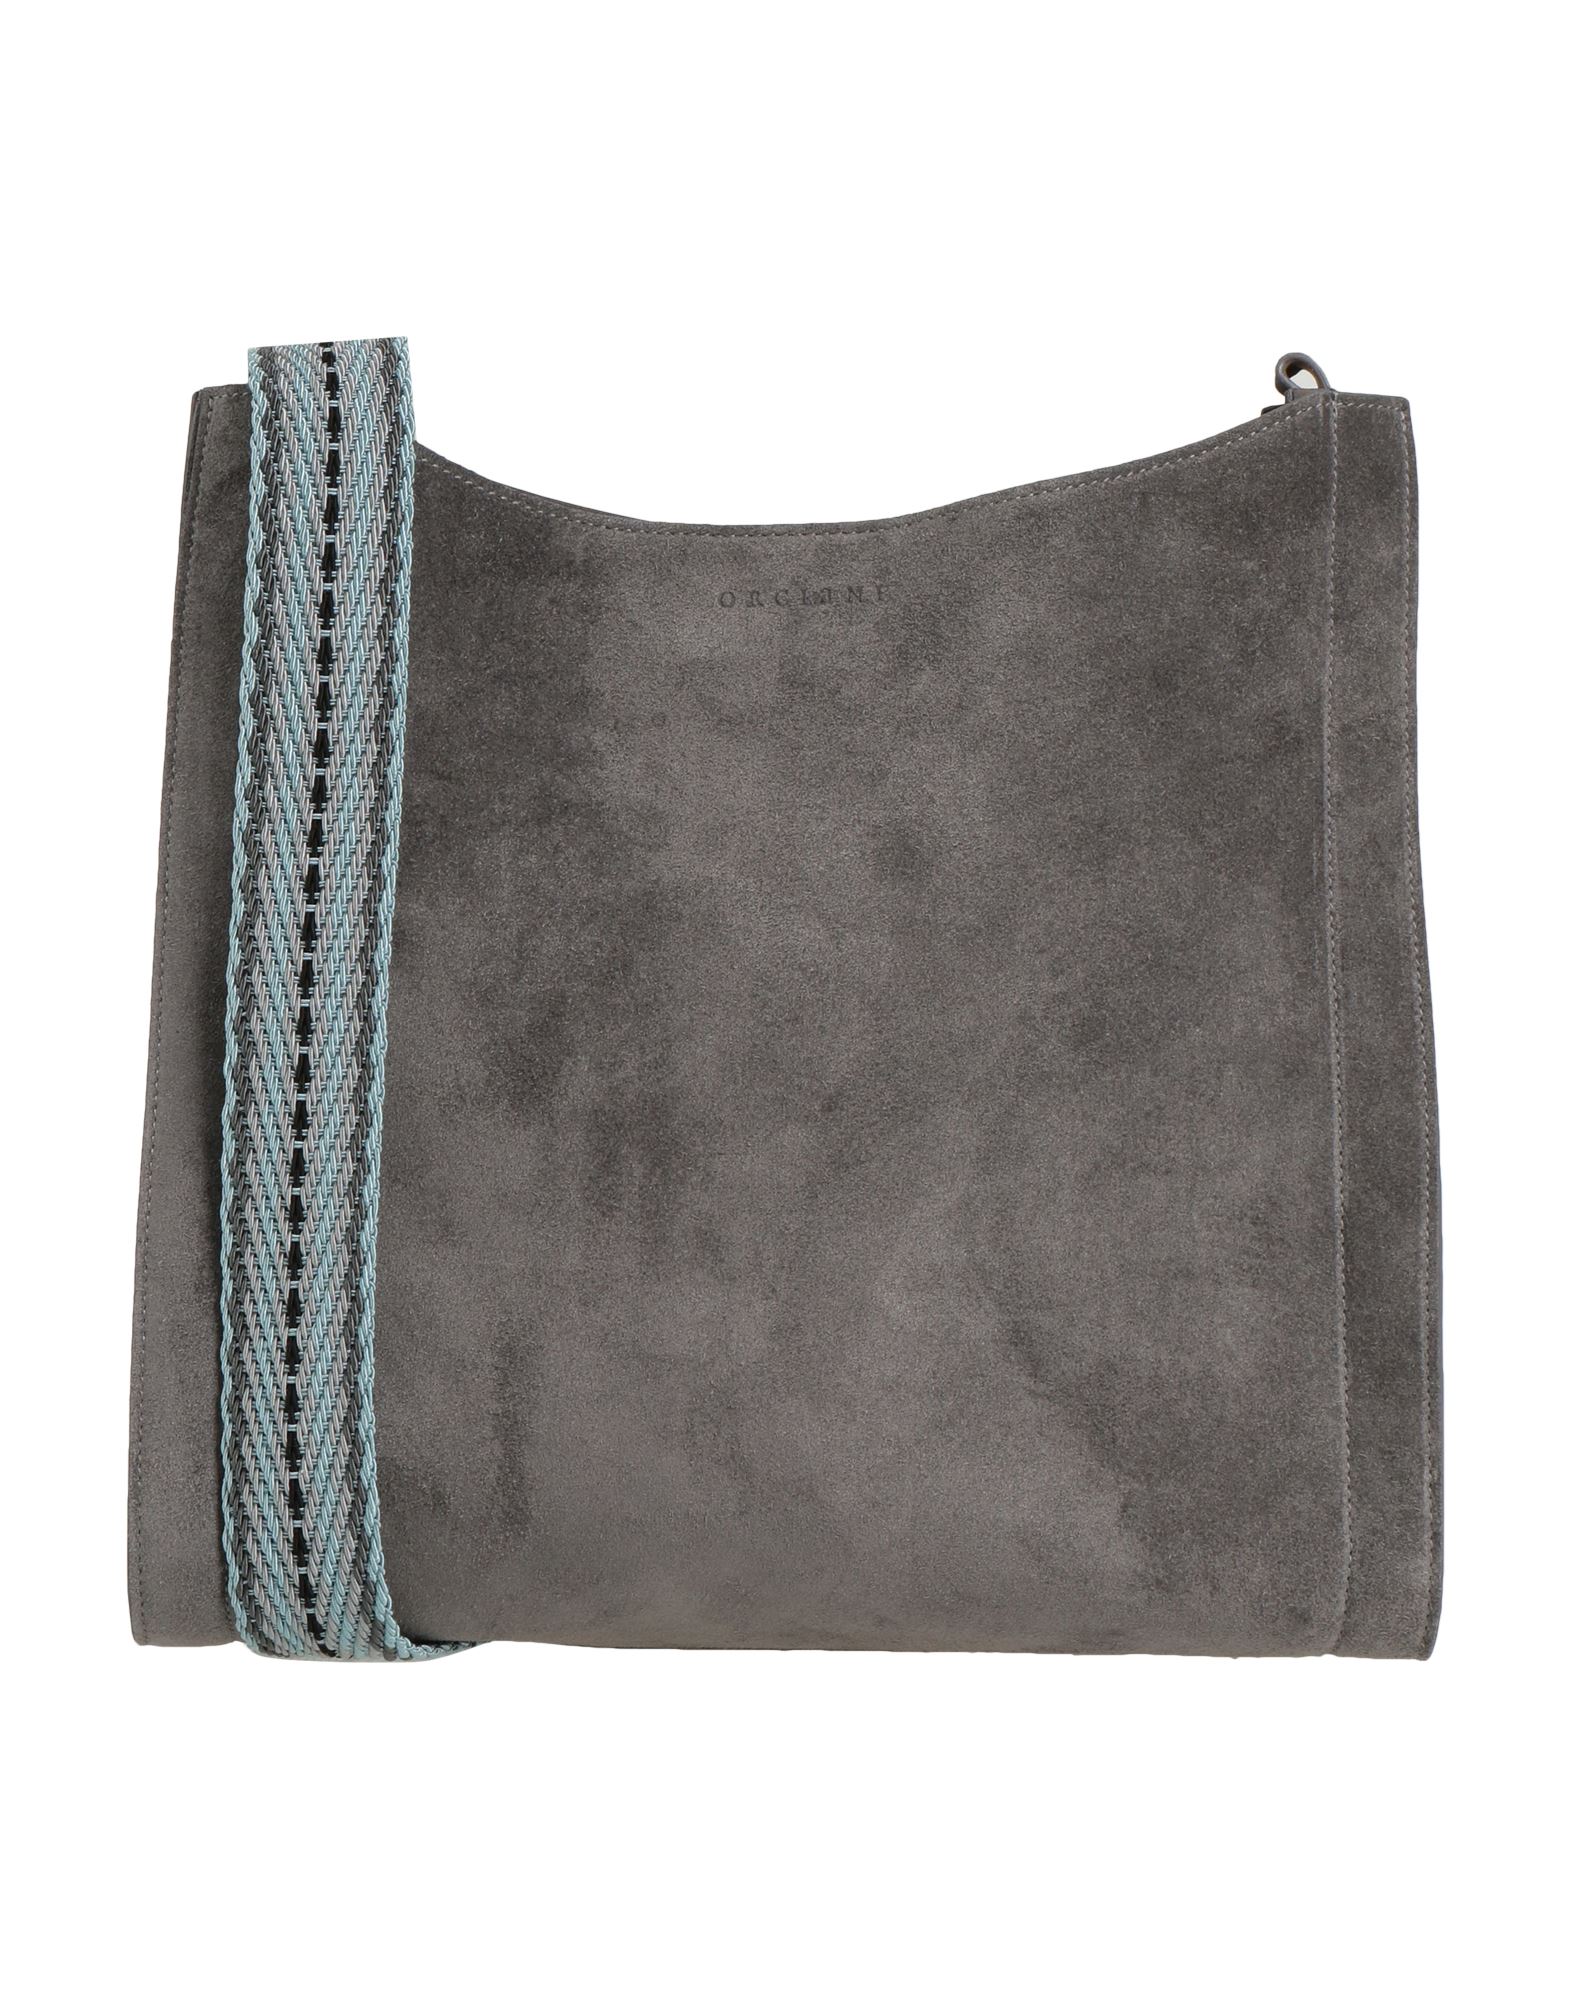 Orciani Handbags In Grey